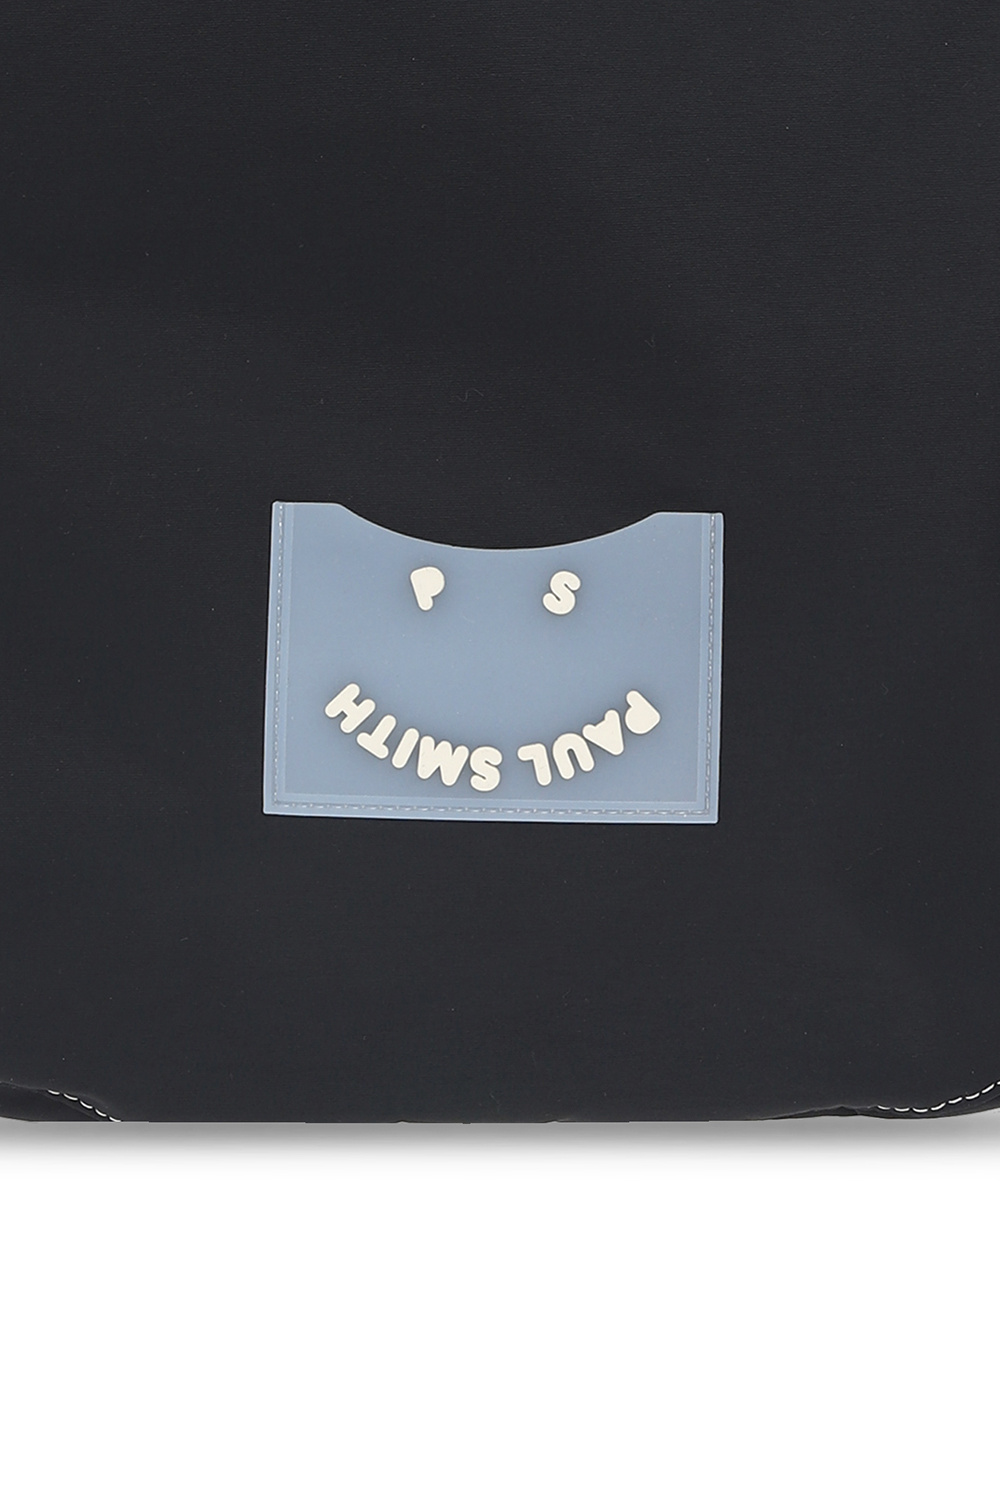 Paul Smith smiley-face Logo Belt Bag - Black